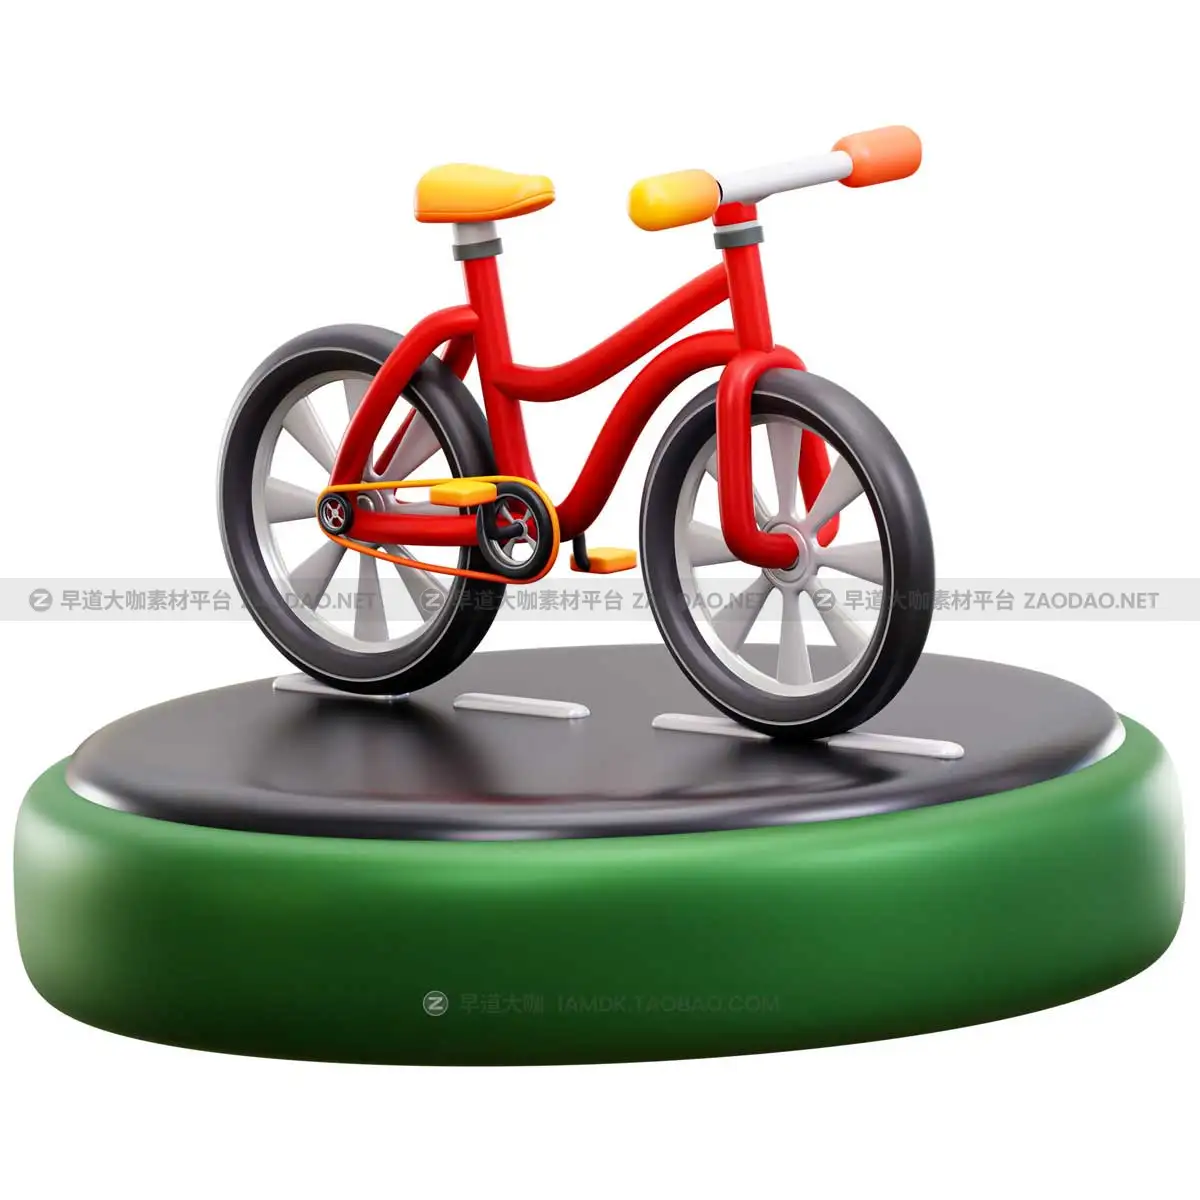 20个时尚奥林匹克体育运动健身3D插画插图图标Icons设计素材 Sports And Olympics 3D Illustration Pack插图18